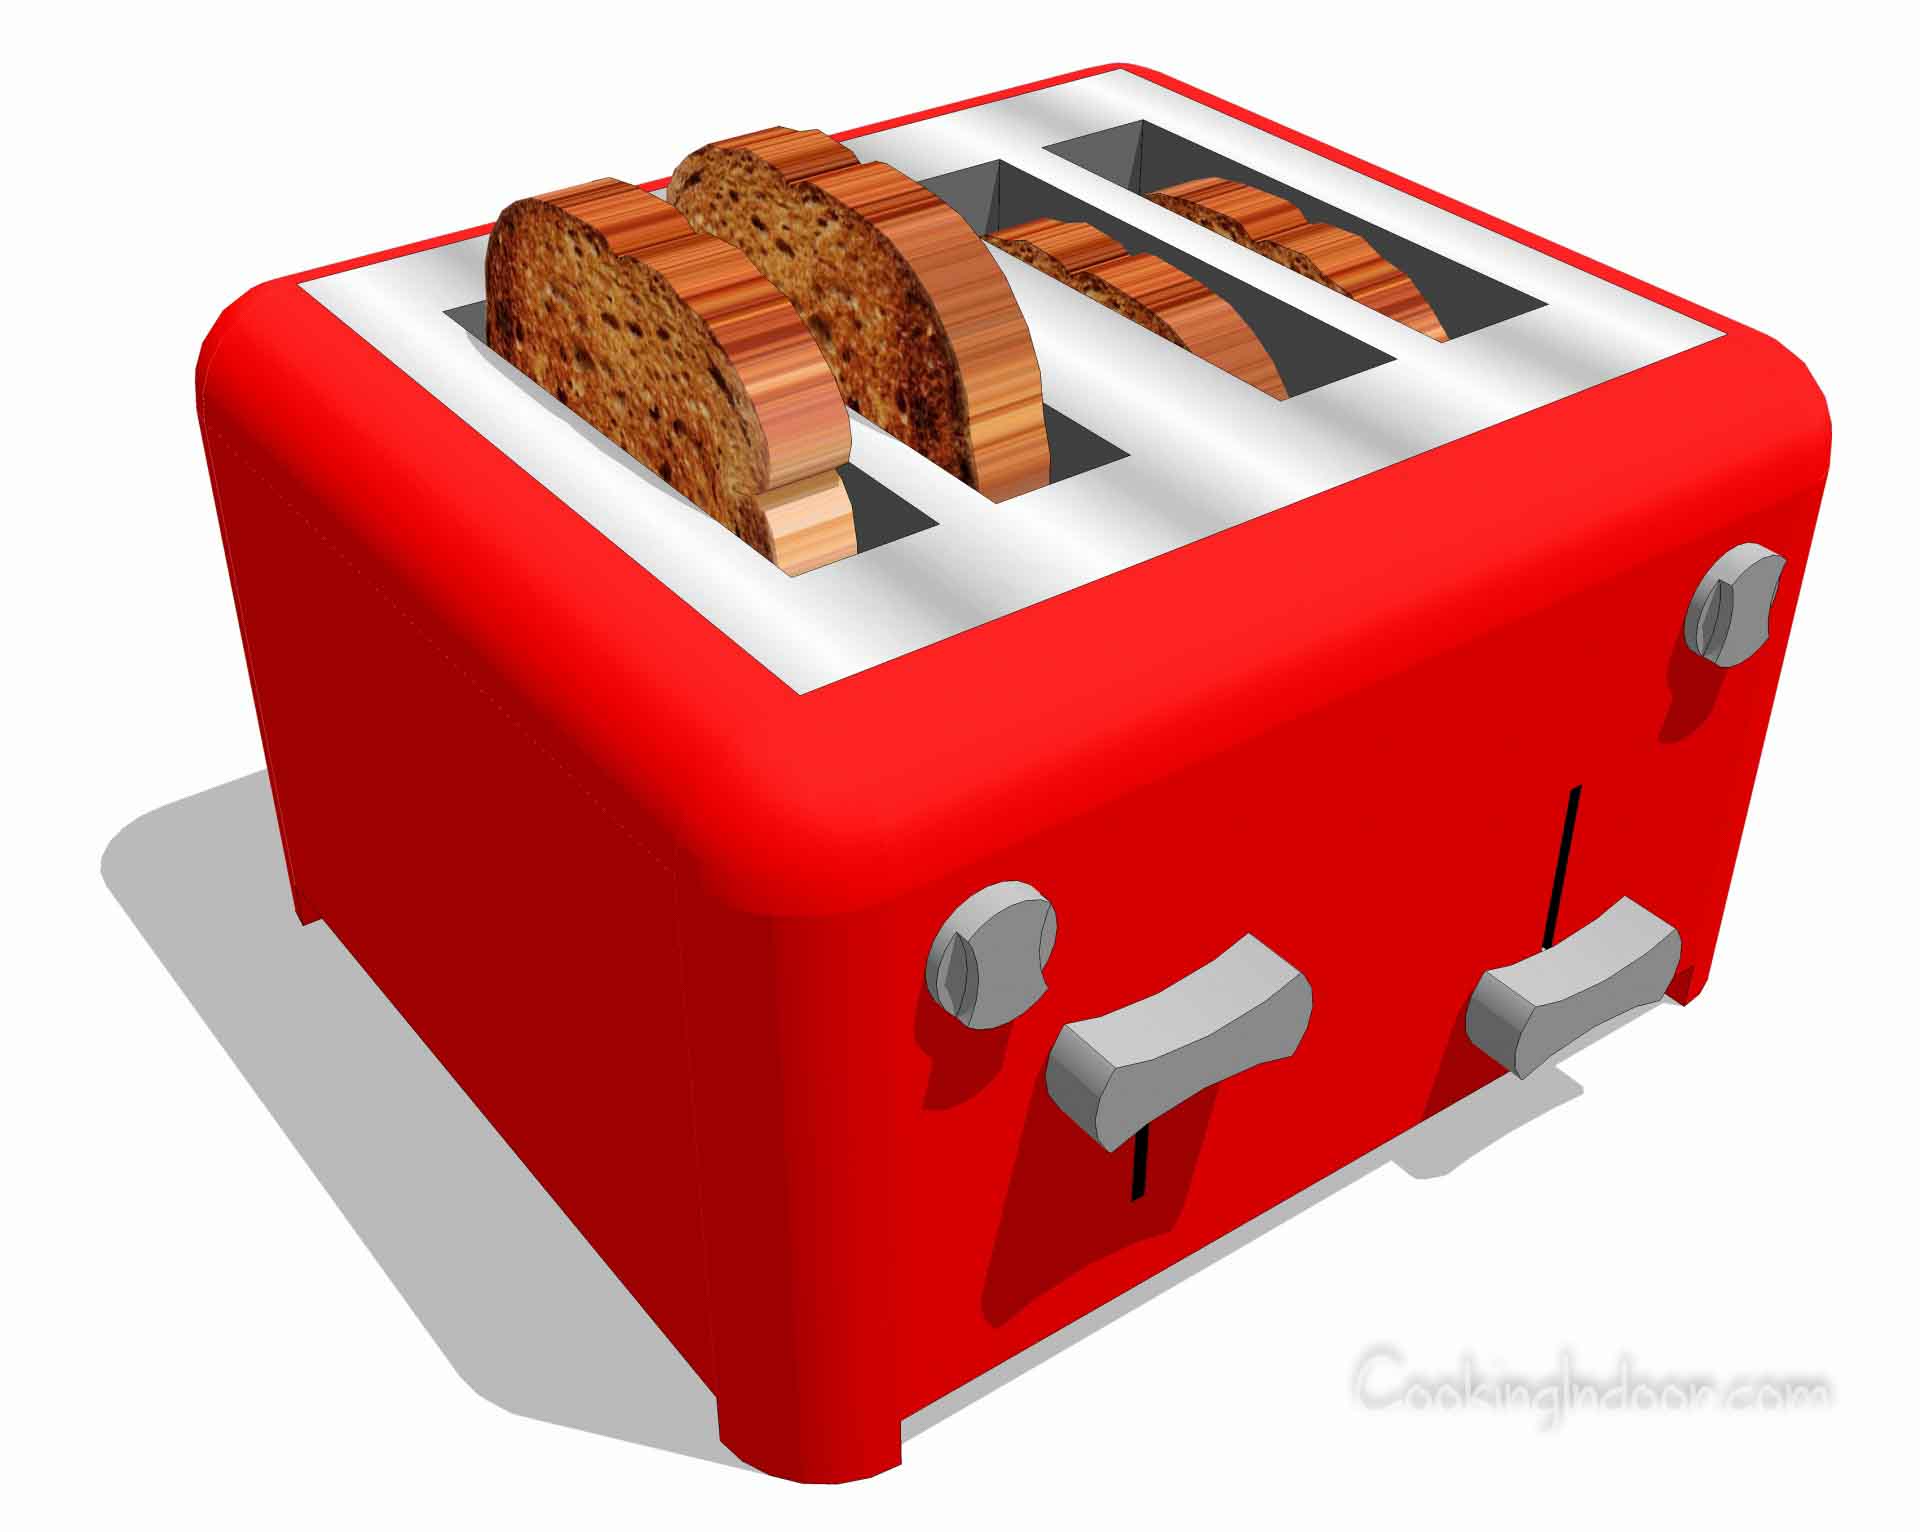 How many watts does a toaster use